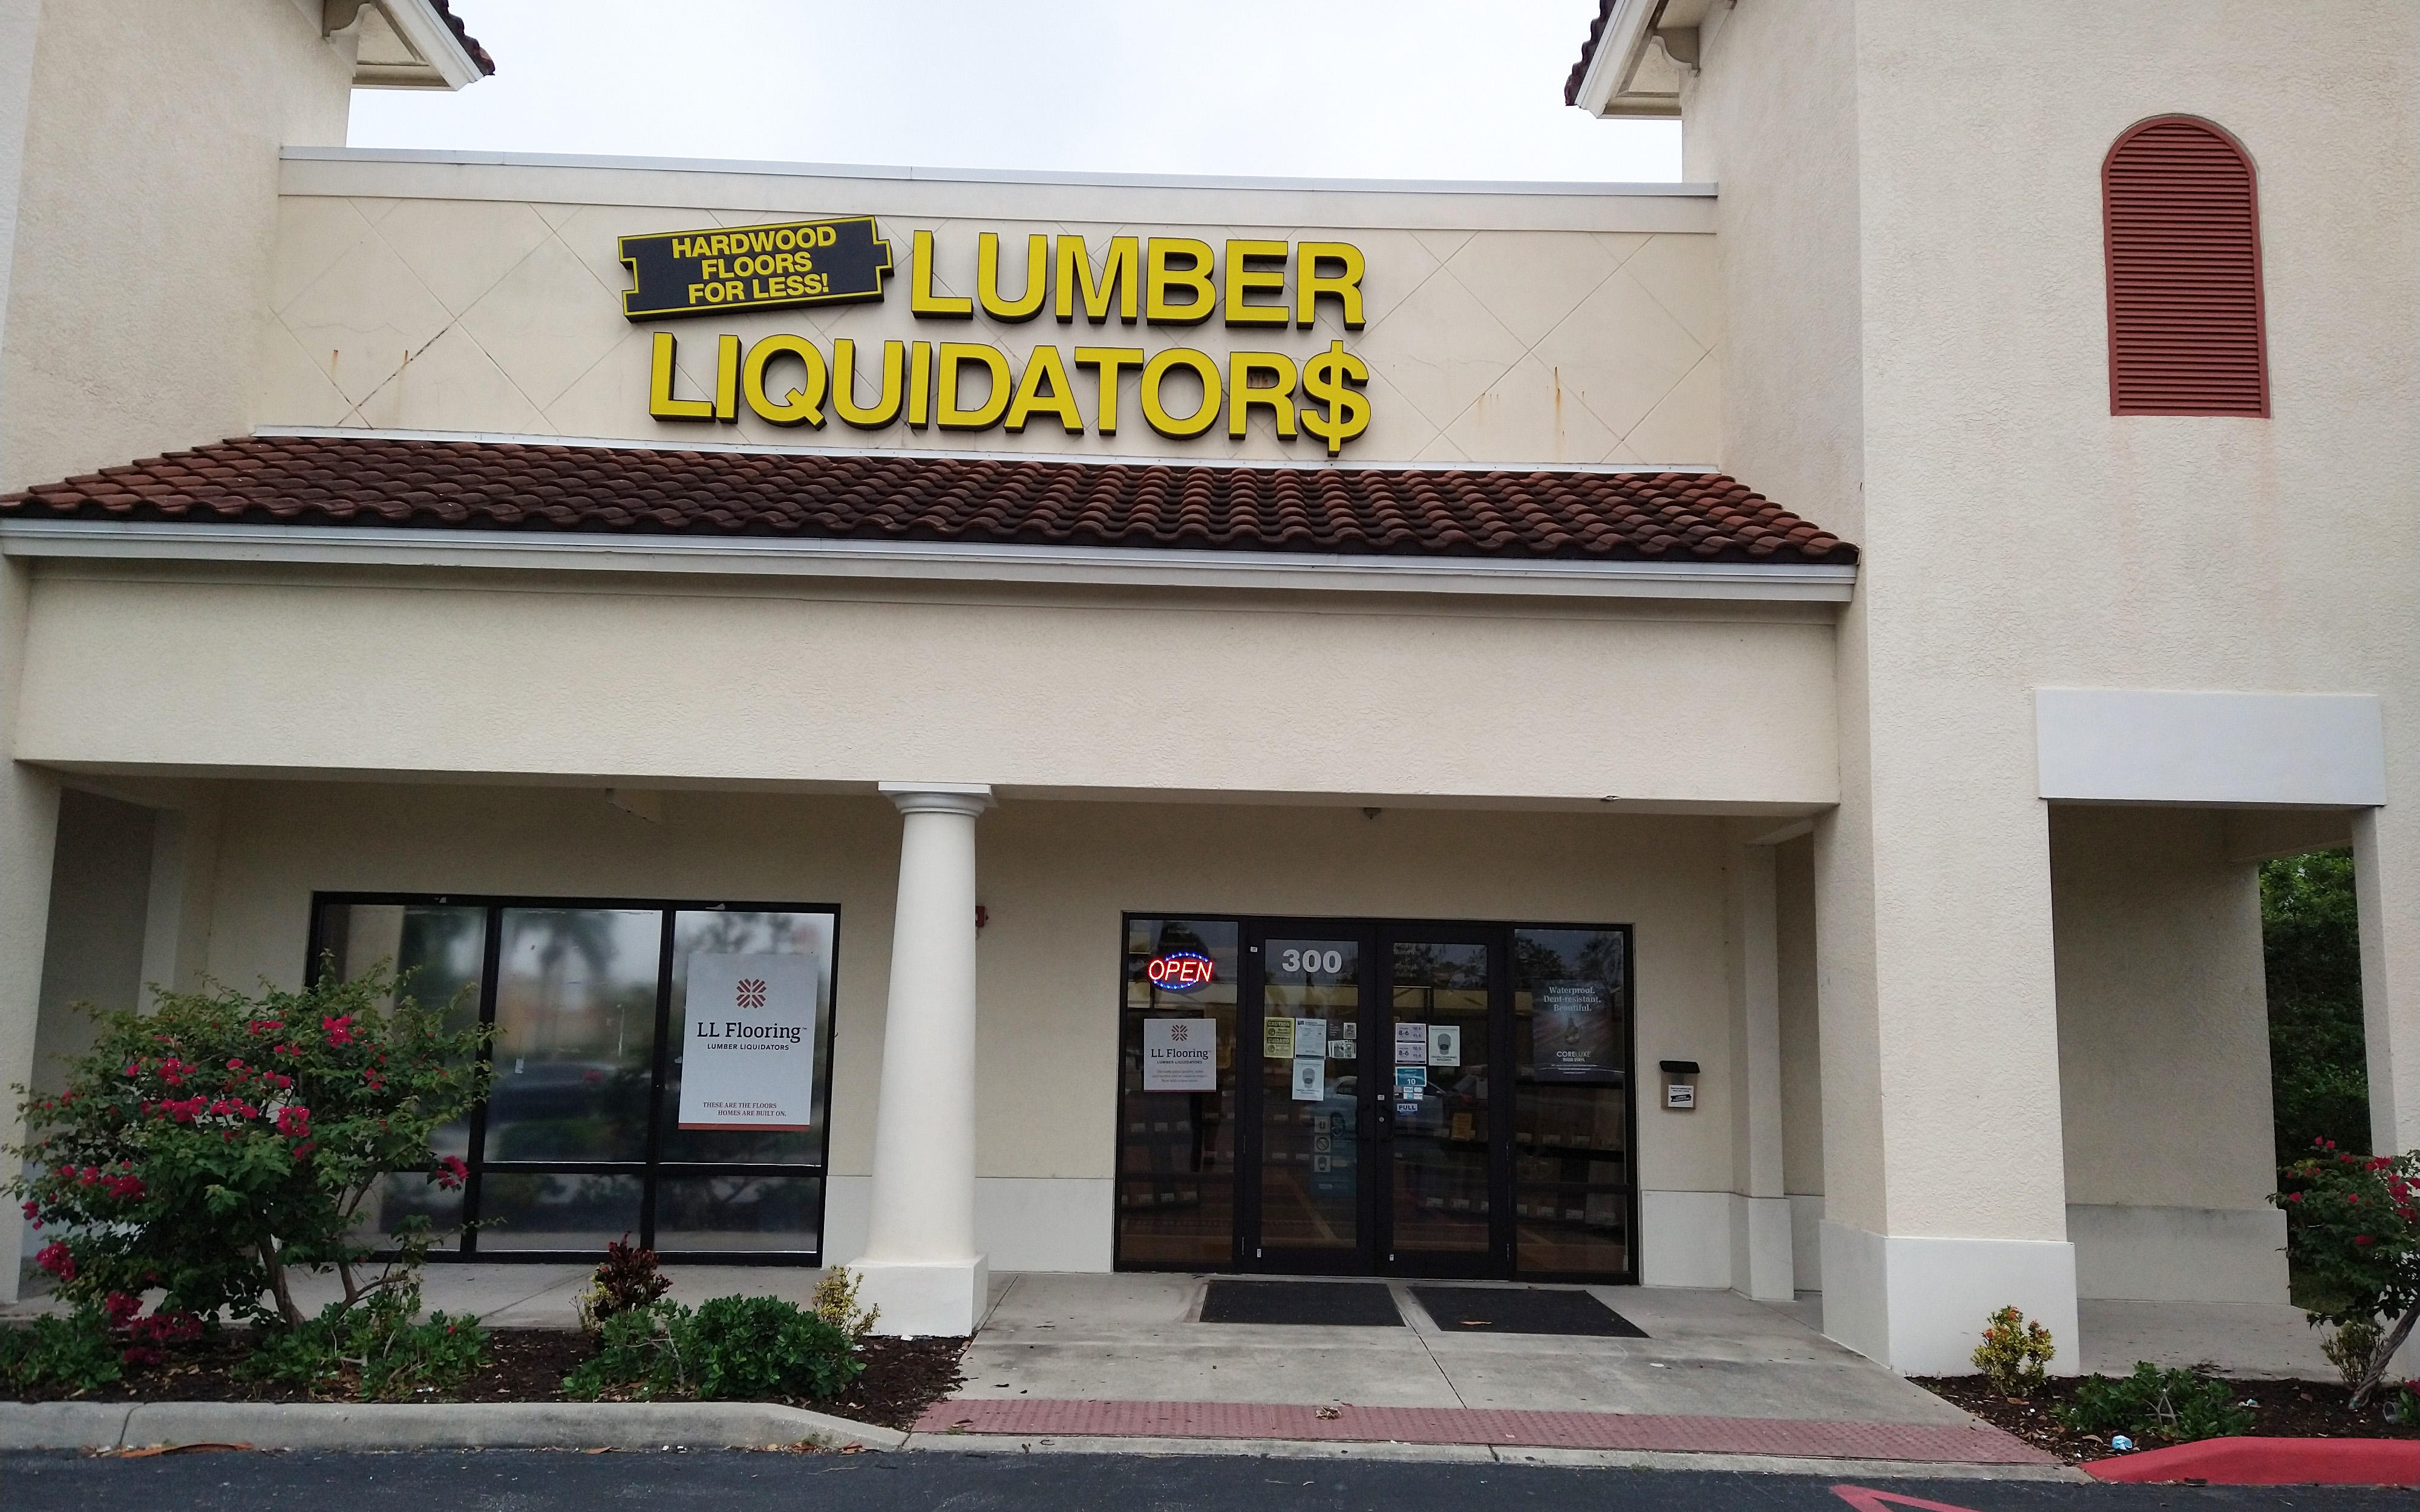 Ll Flooring Lumber Liquidators 1027, Tile Flooring Fort Myers Florida